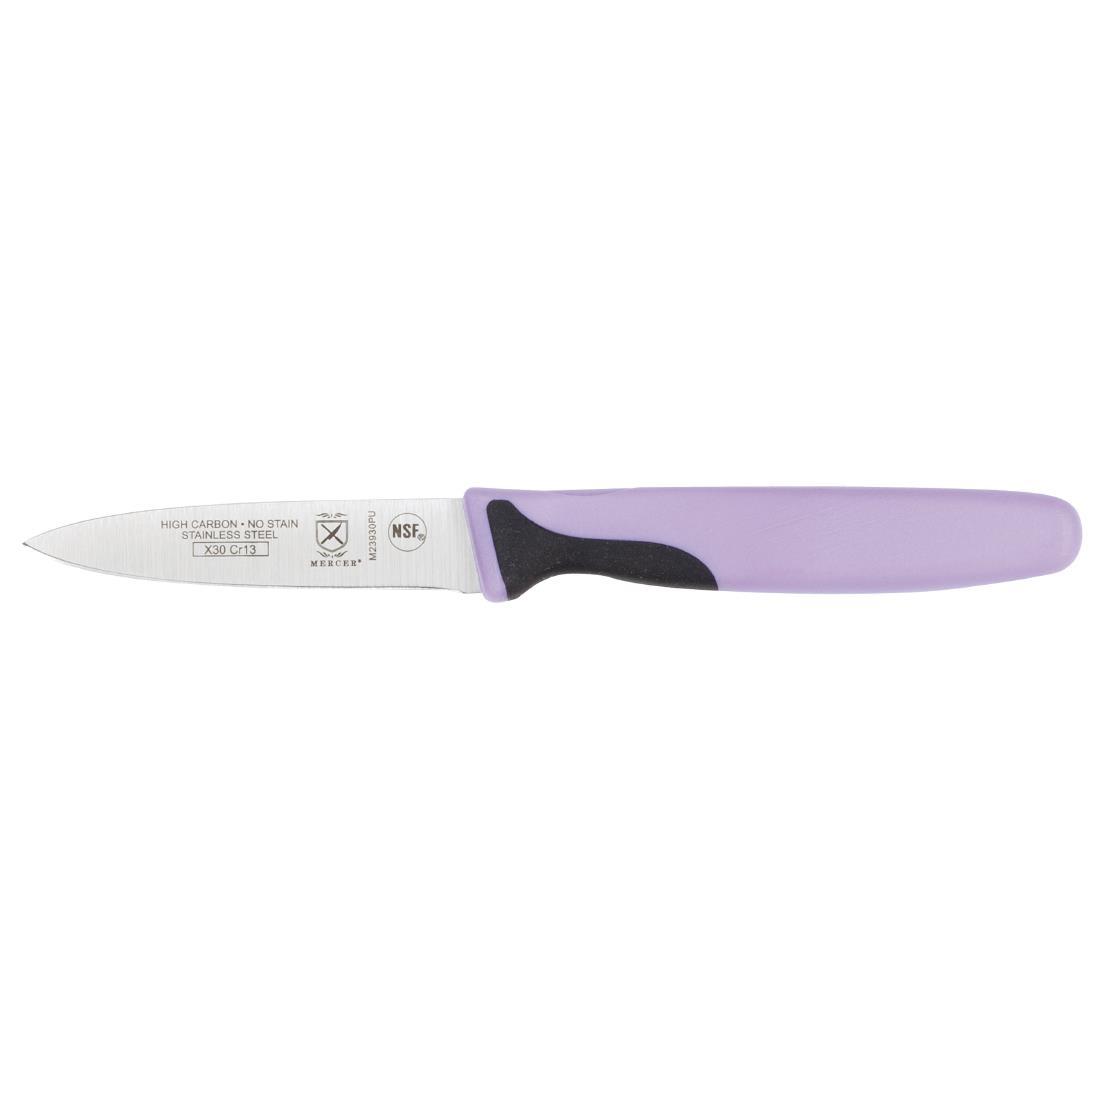 Mercer Culinary Allergen Safety Slim Paring Knife 8cm - FB507  - 1